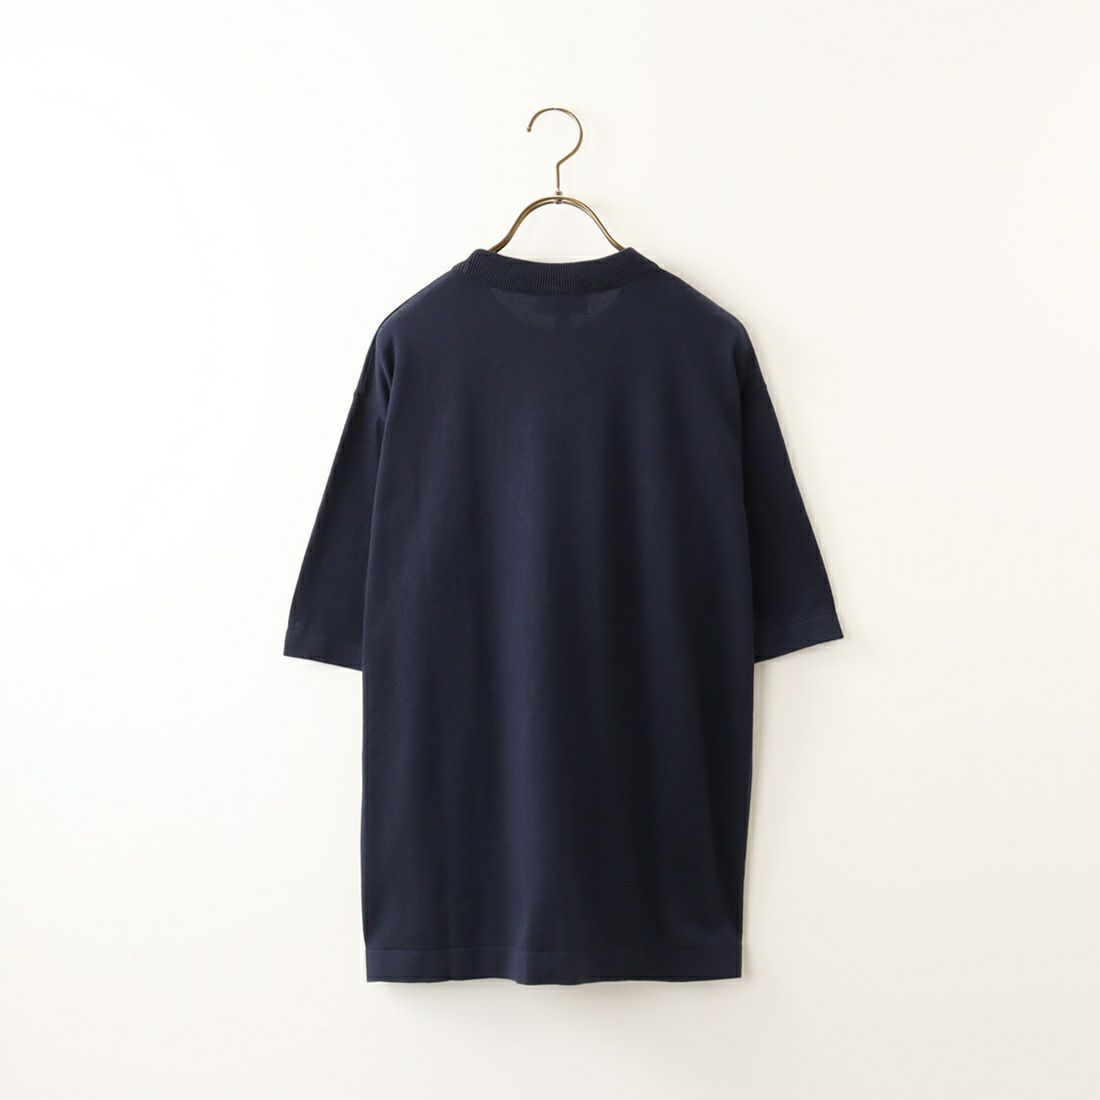 LACOSTE [ラコステ] リラックスフィットニットTシャツ [TH089] 166 NAVY B